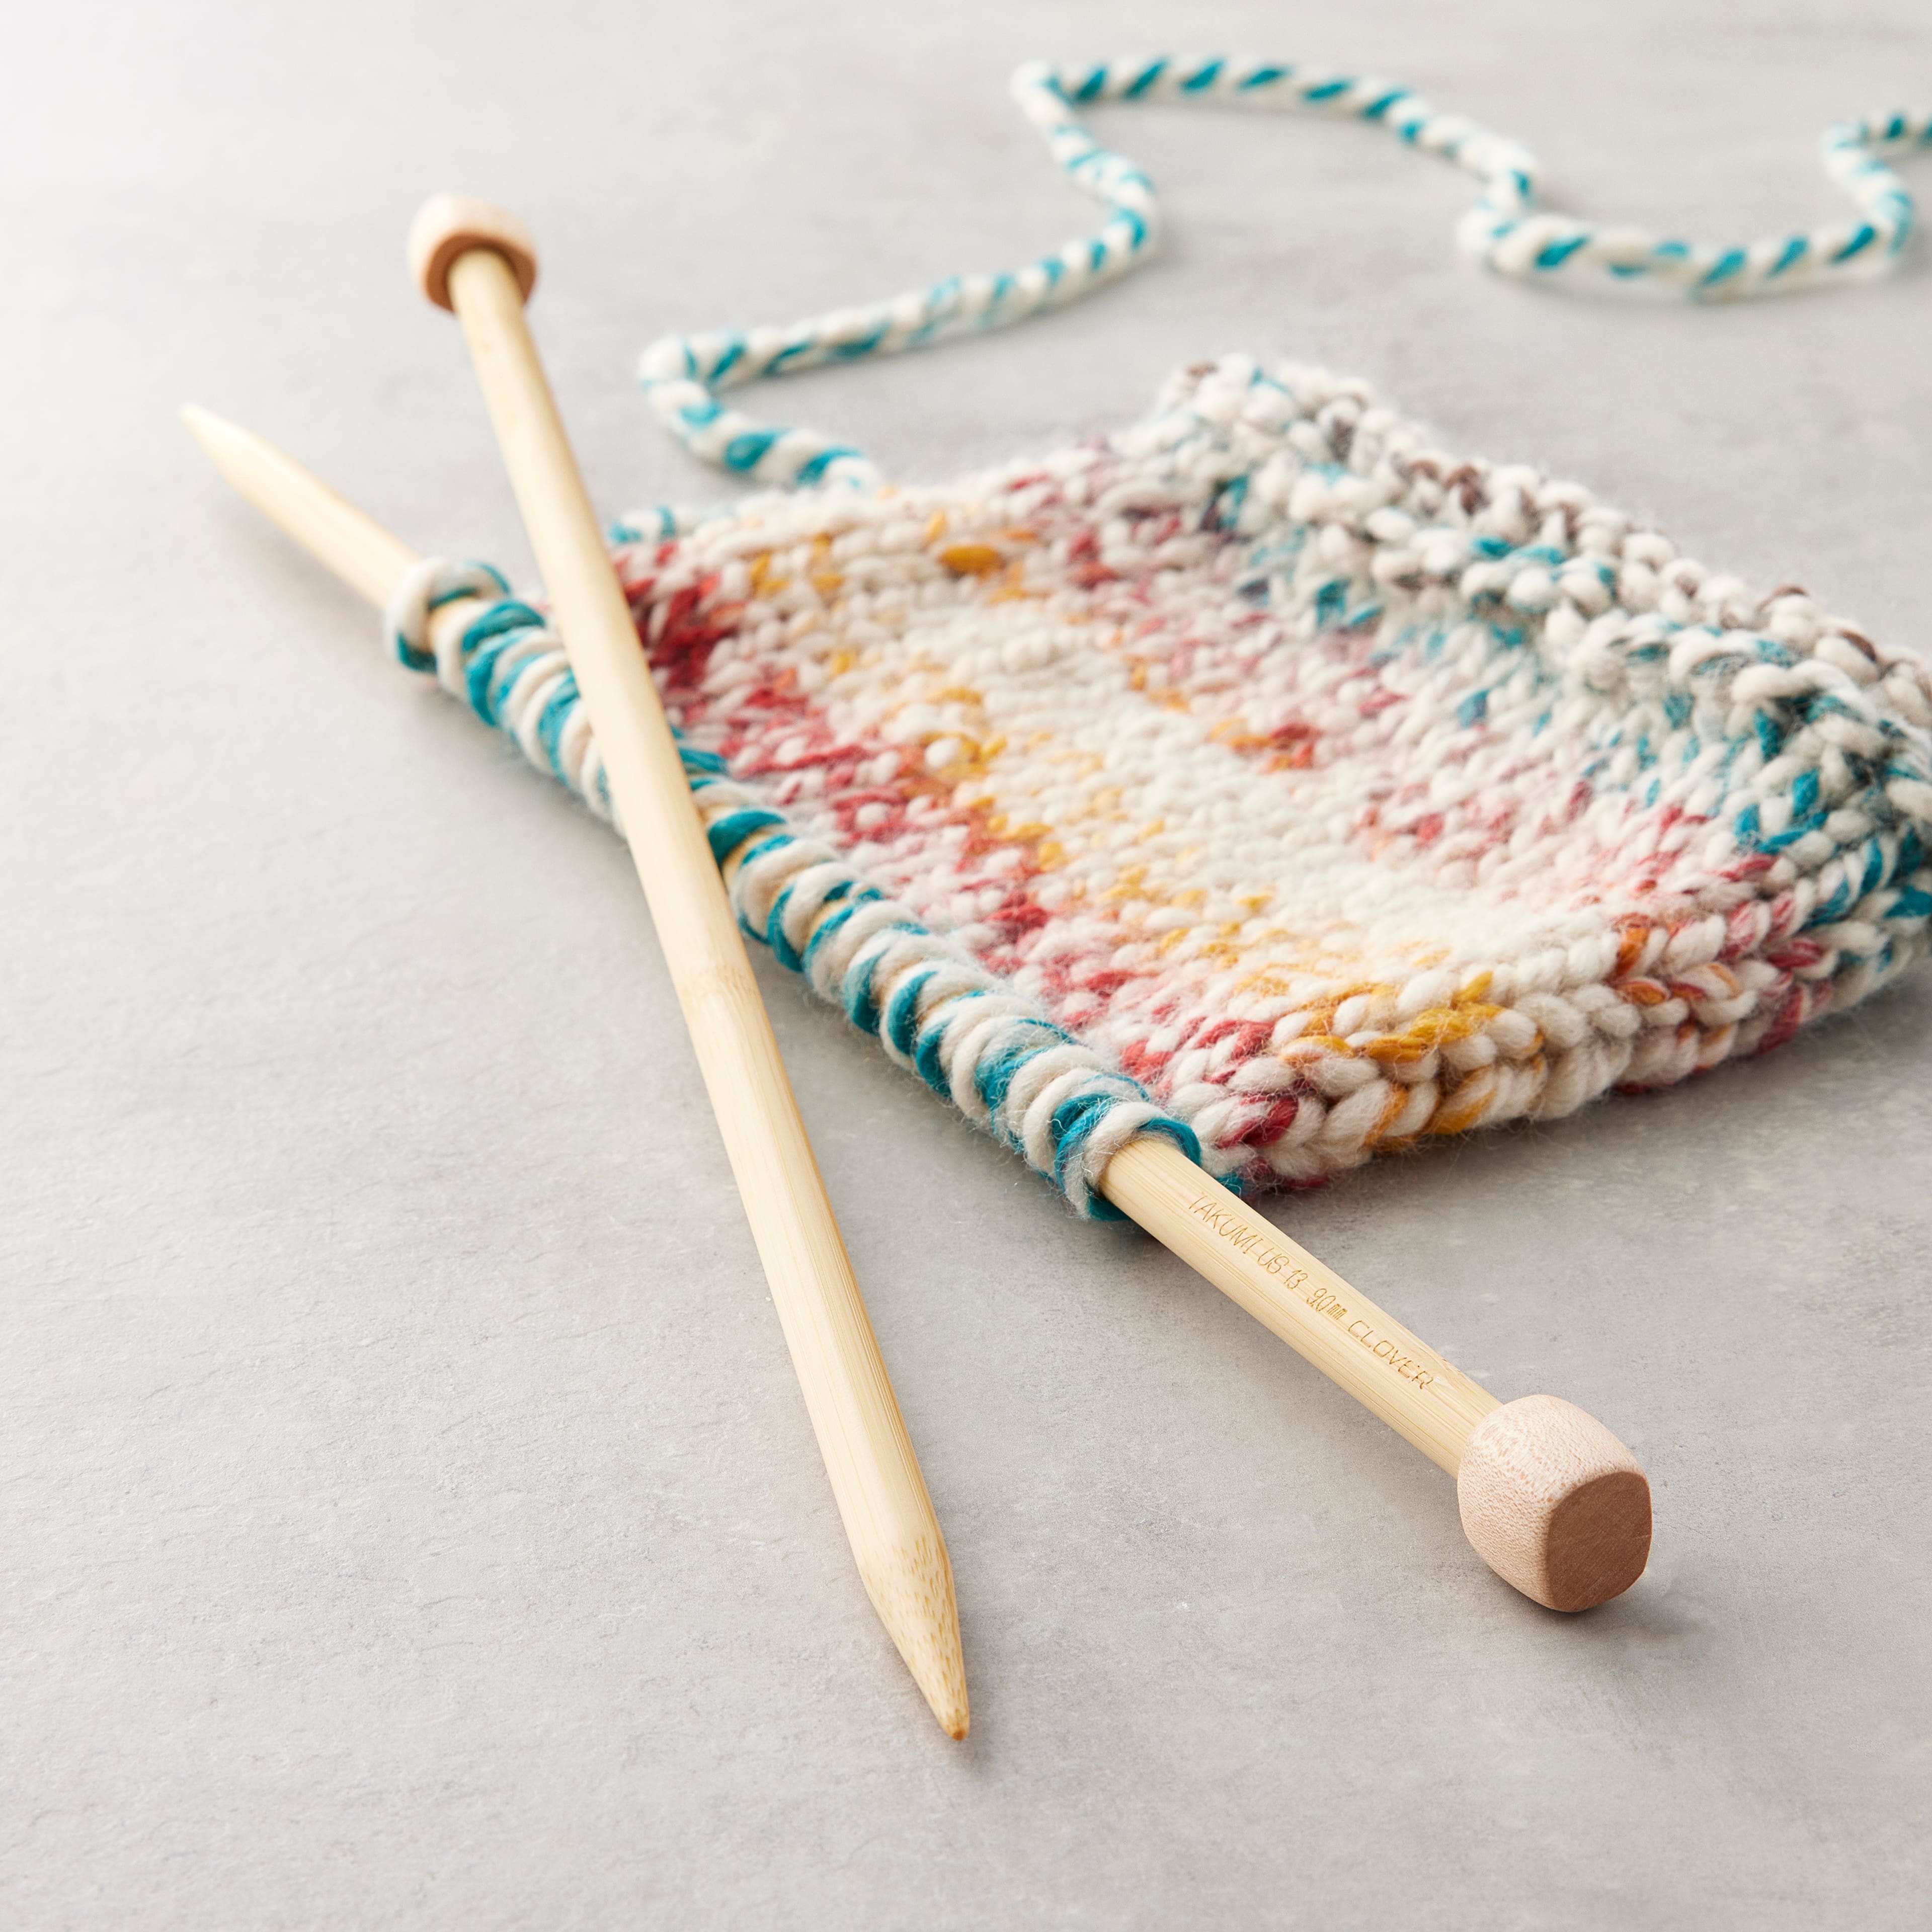 Takumi Bamboo Single Pointed Knitting Needles, 14&#x201D;